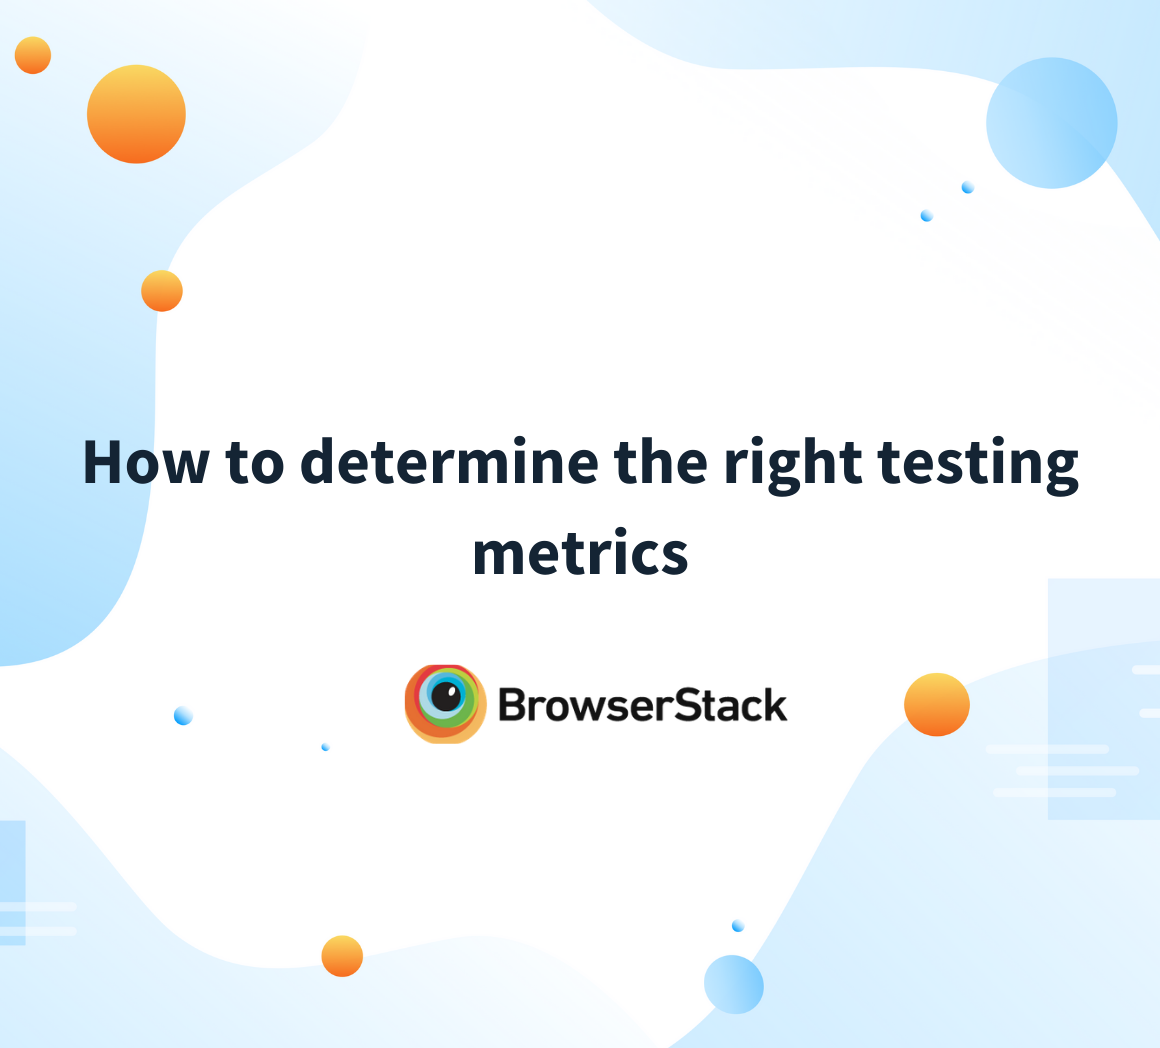 Deciding the right testing metrics